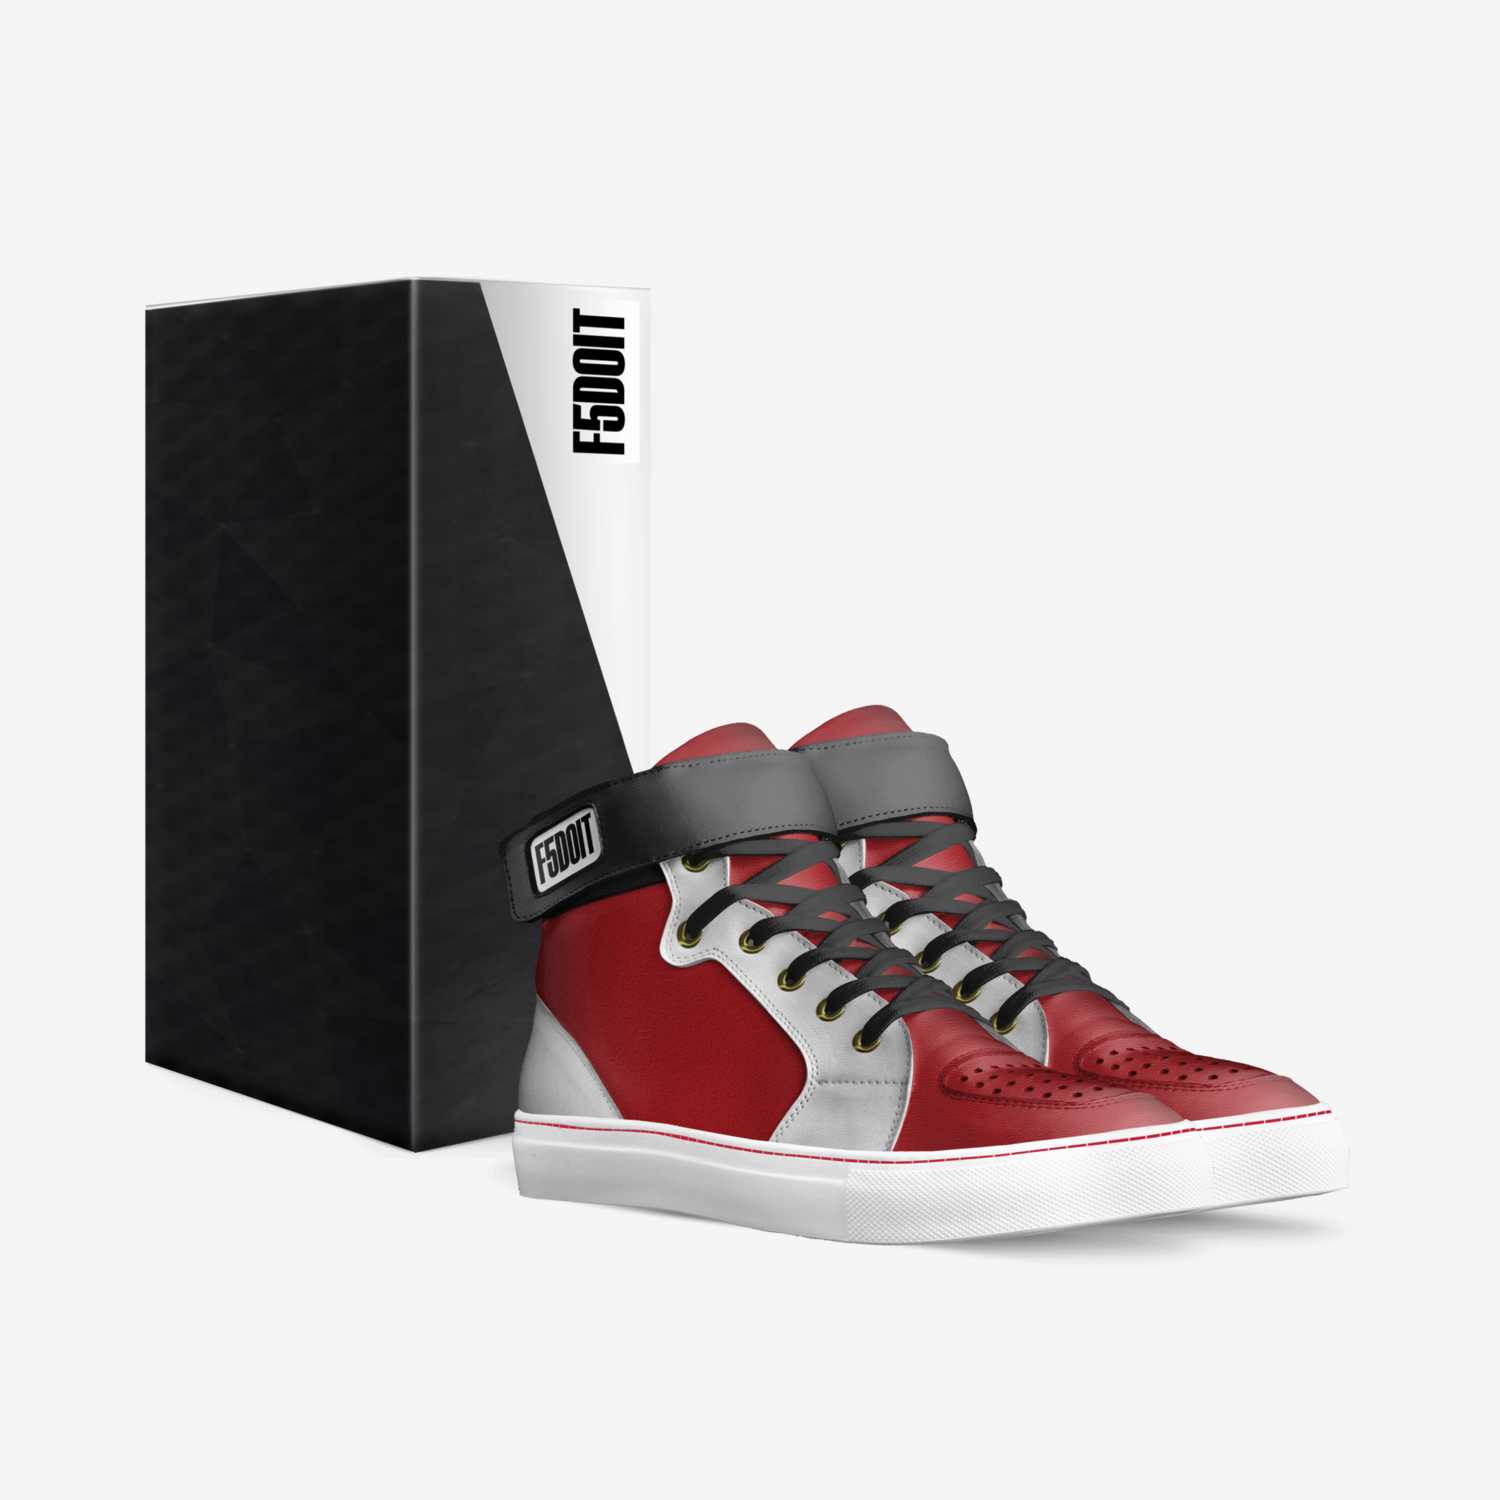 Erba custom made in Italy shoes by John Harris | Box view